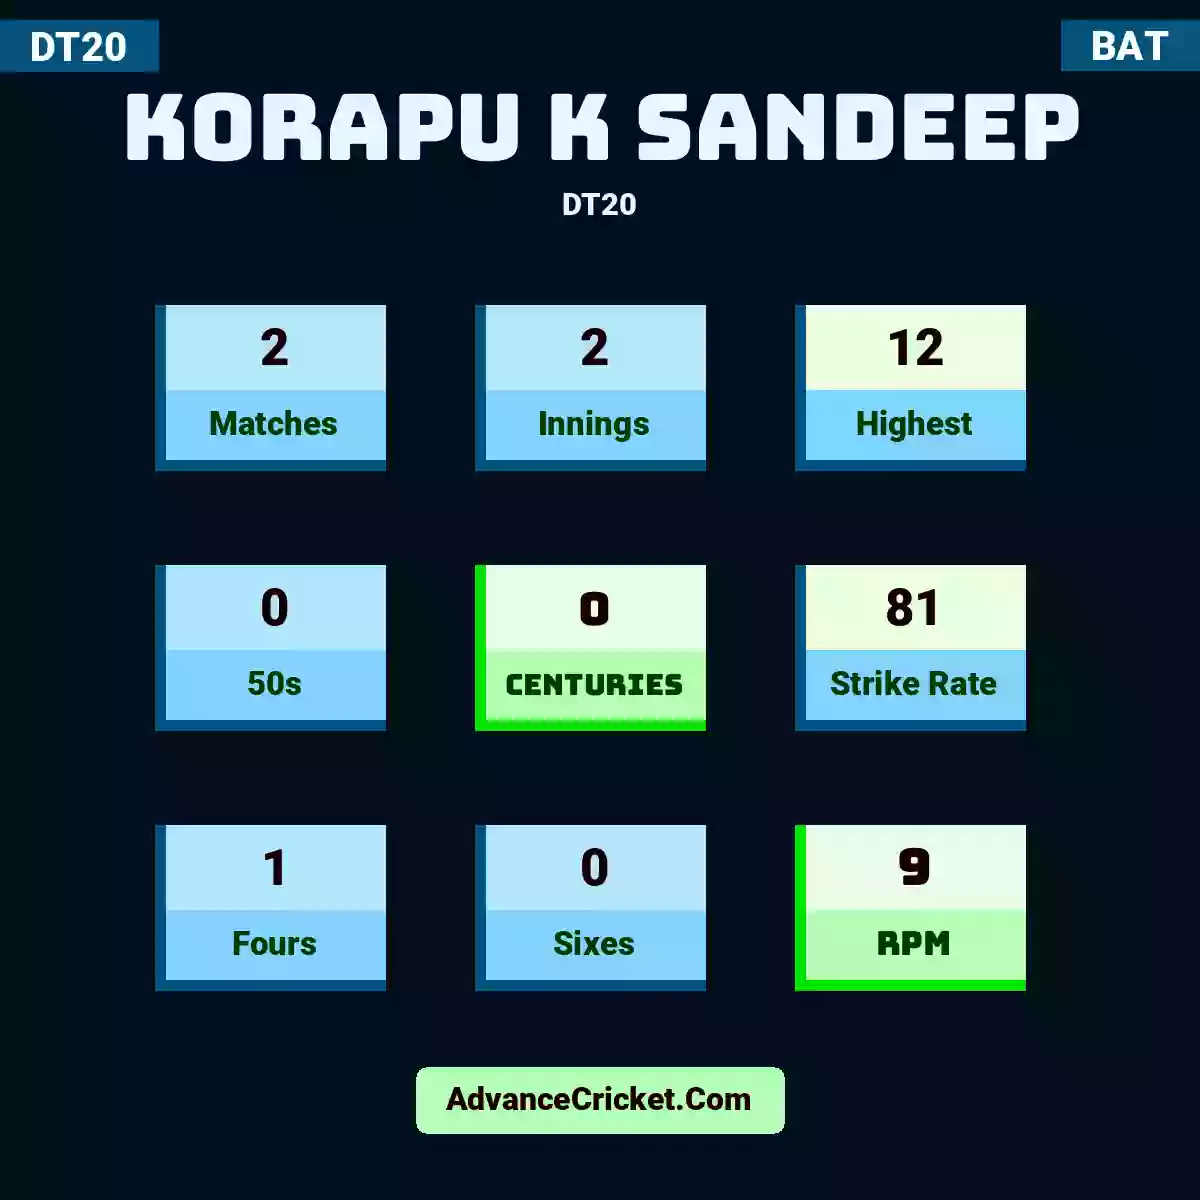 Korapu K Sandeep DT20 , Korapu K Sandeep played 2 matches, scored 12 runs as highest, 0 half-centuries, and 0 centuries, with a strike rate of 81. KK.Sandeep hit 1 fours and 0 sixes, with an RPM of 9.